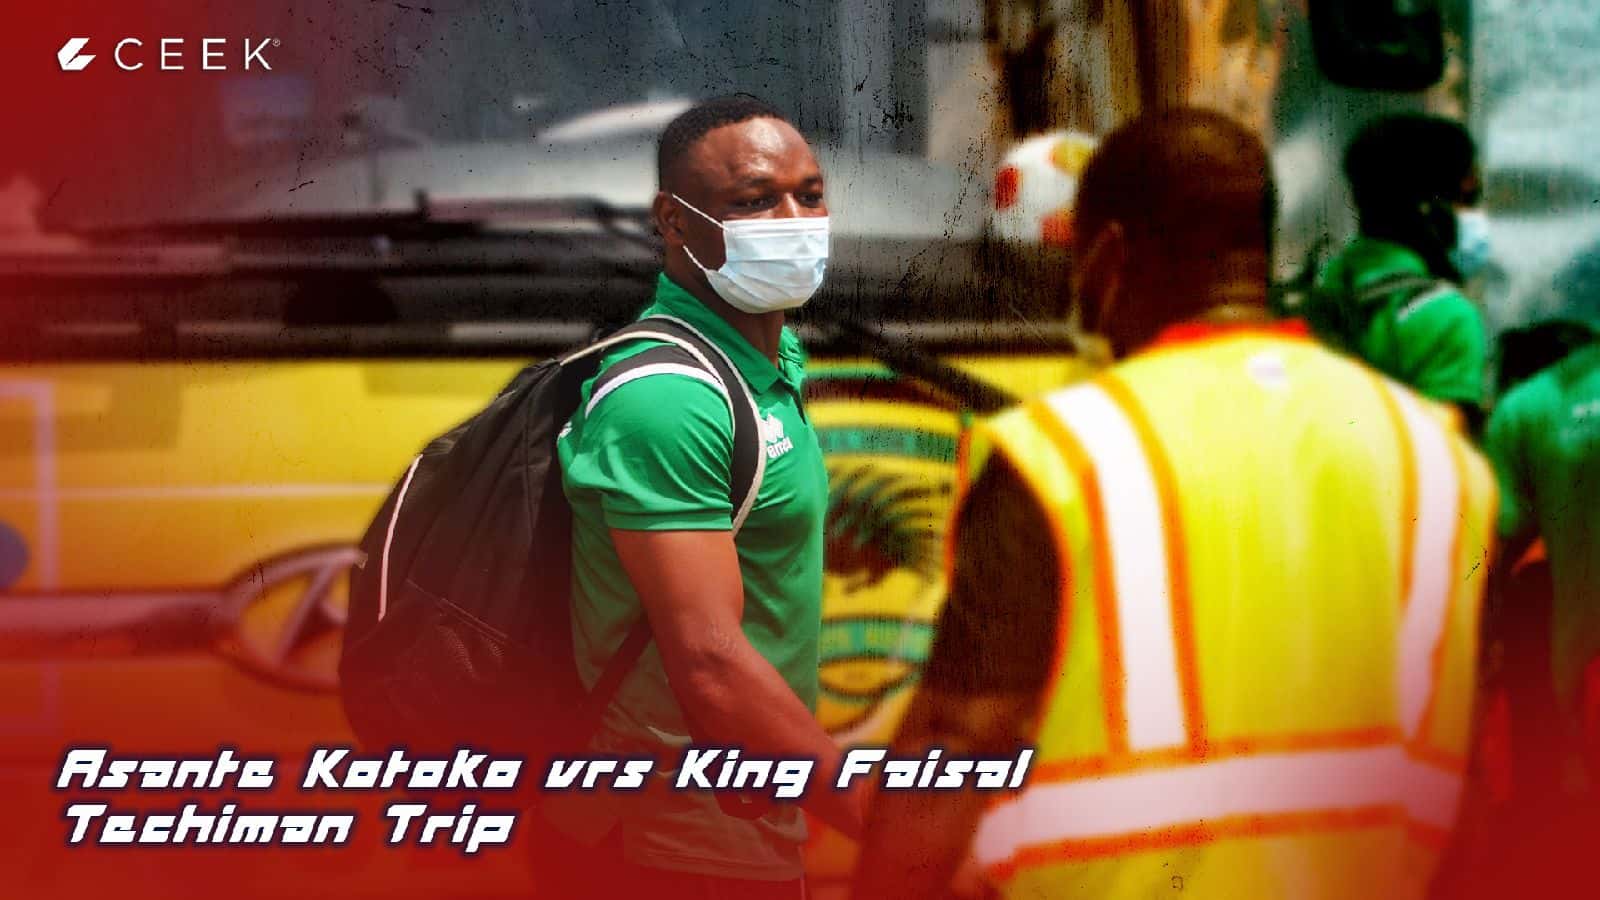 Asante Kotoko Asante Kotoko vrs King Faisal - Techiman Trip